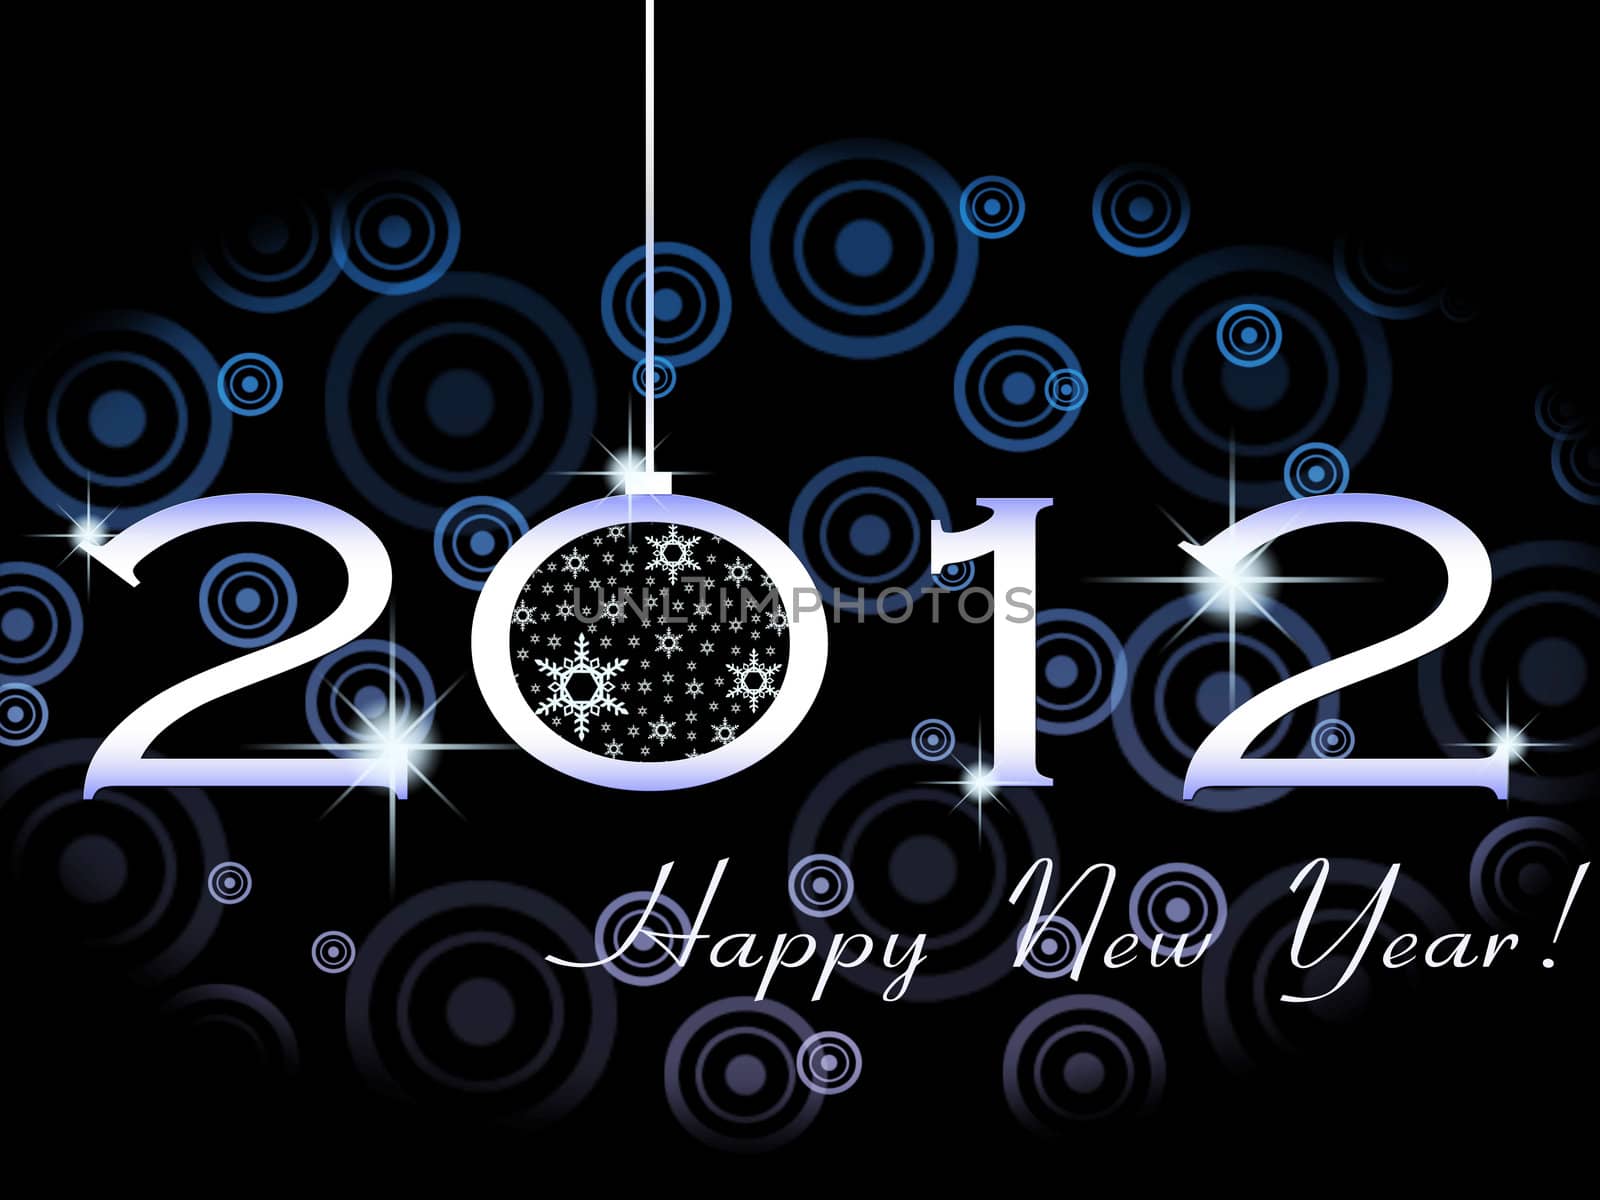 Happy new year 2012 by alena0509